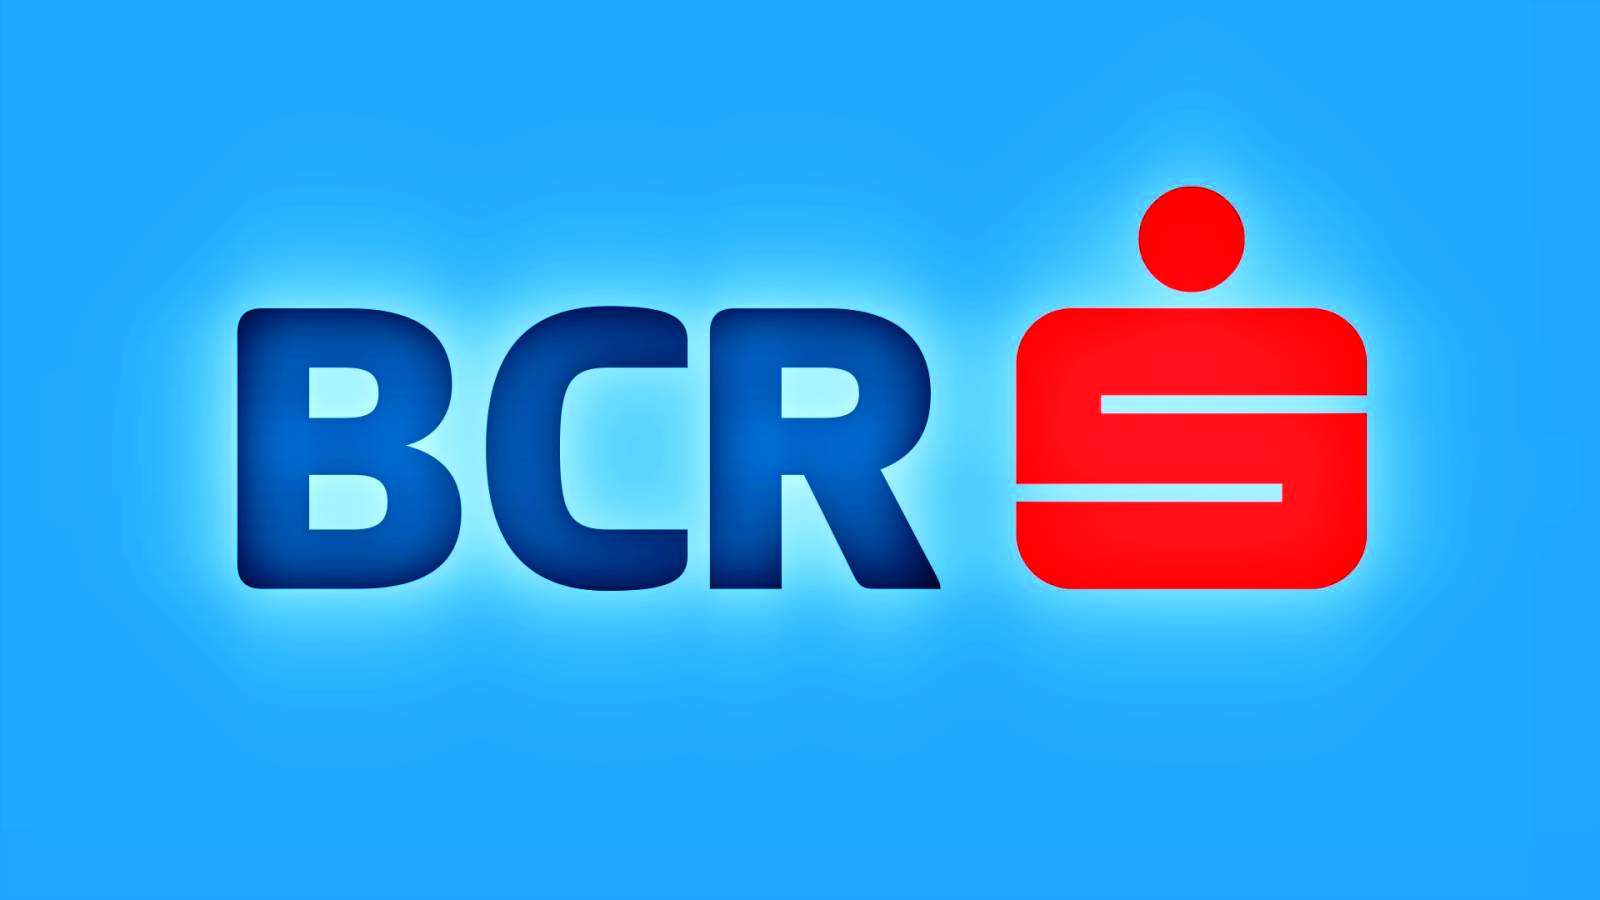 BCR Roemenië profiel